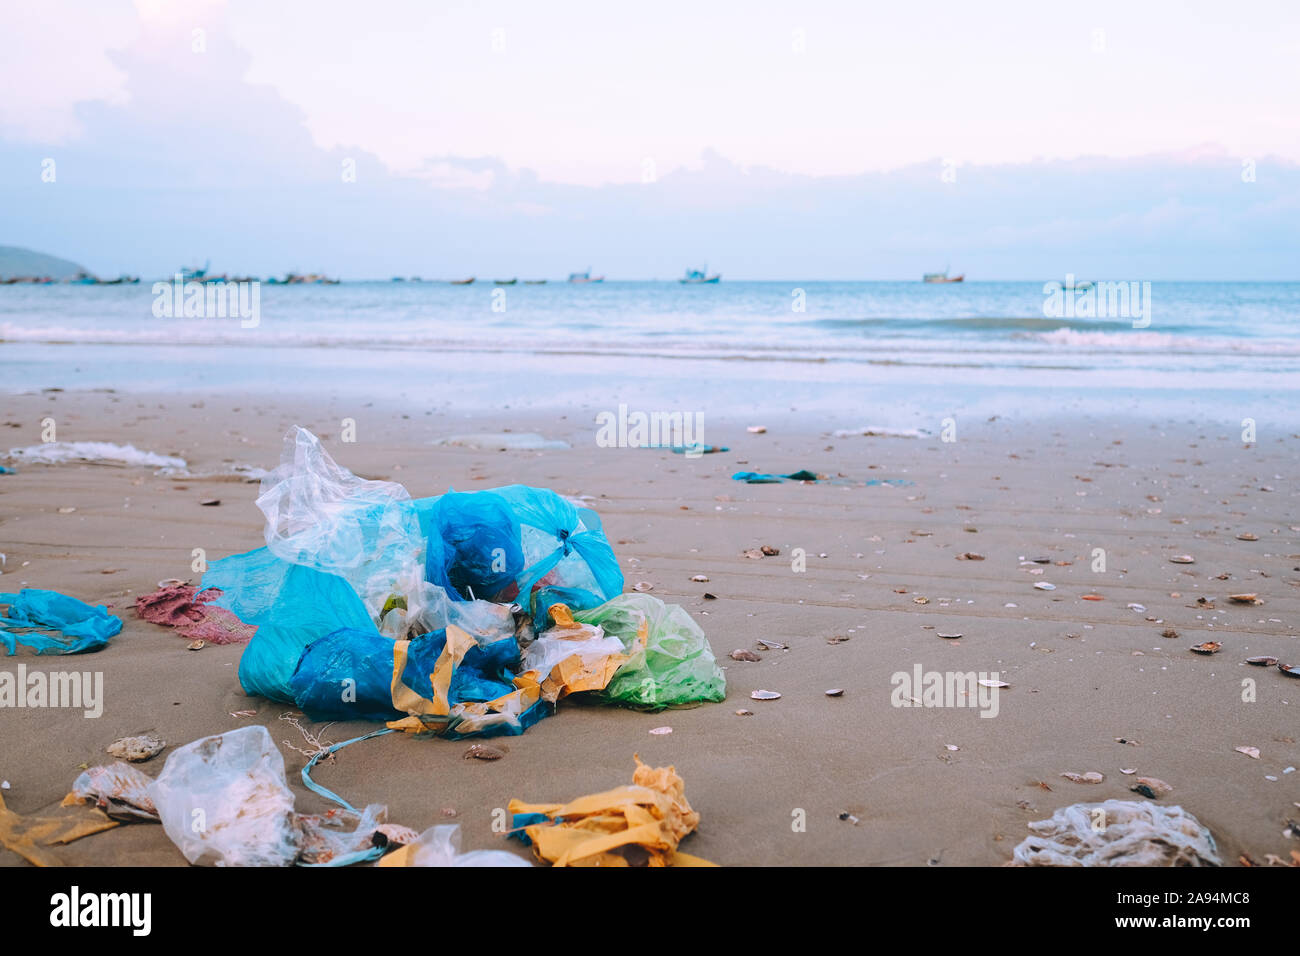 Garbage bags. Blue plastic garbage bags full of trash on the beach